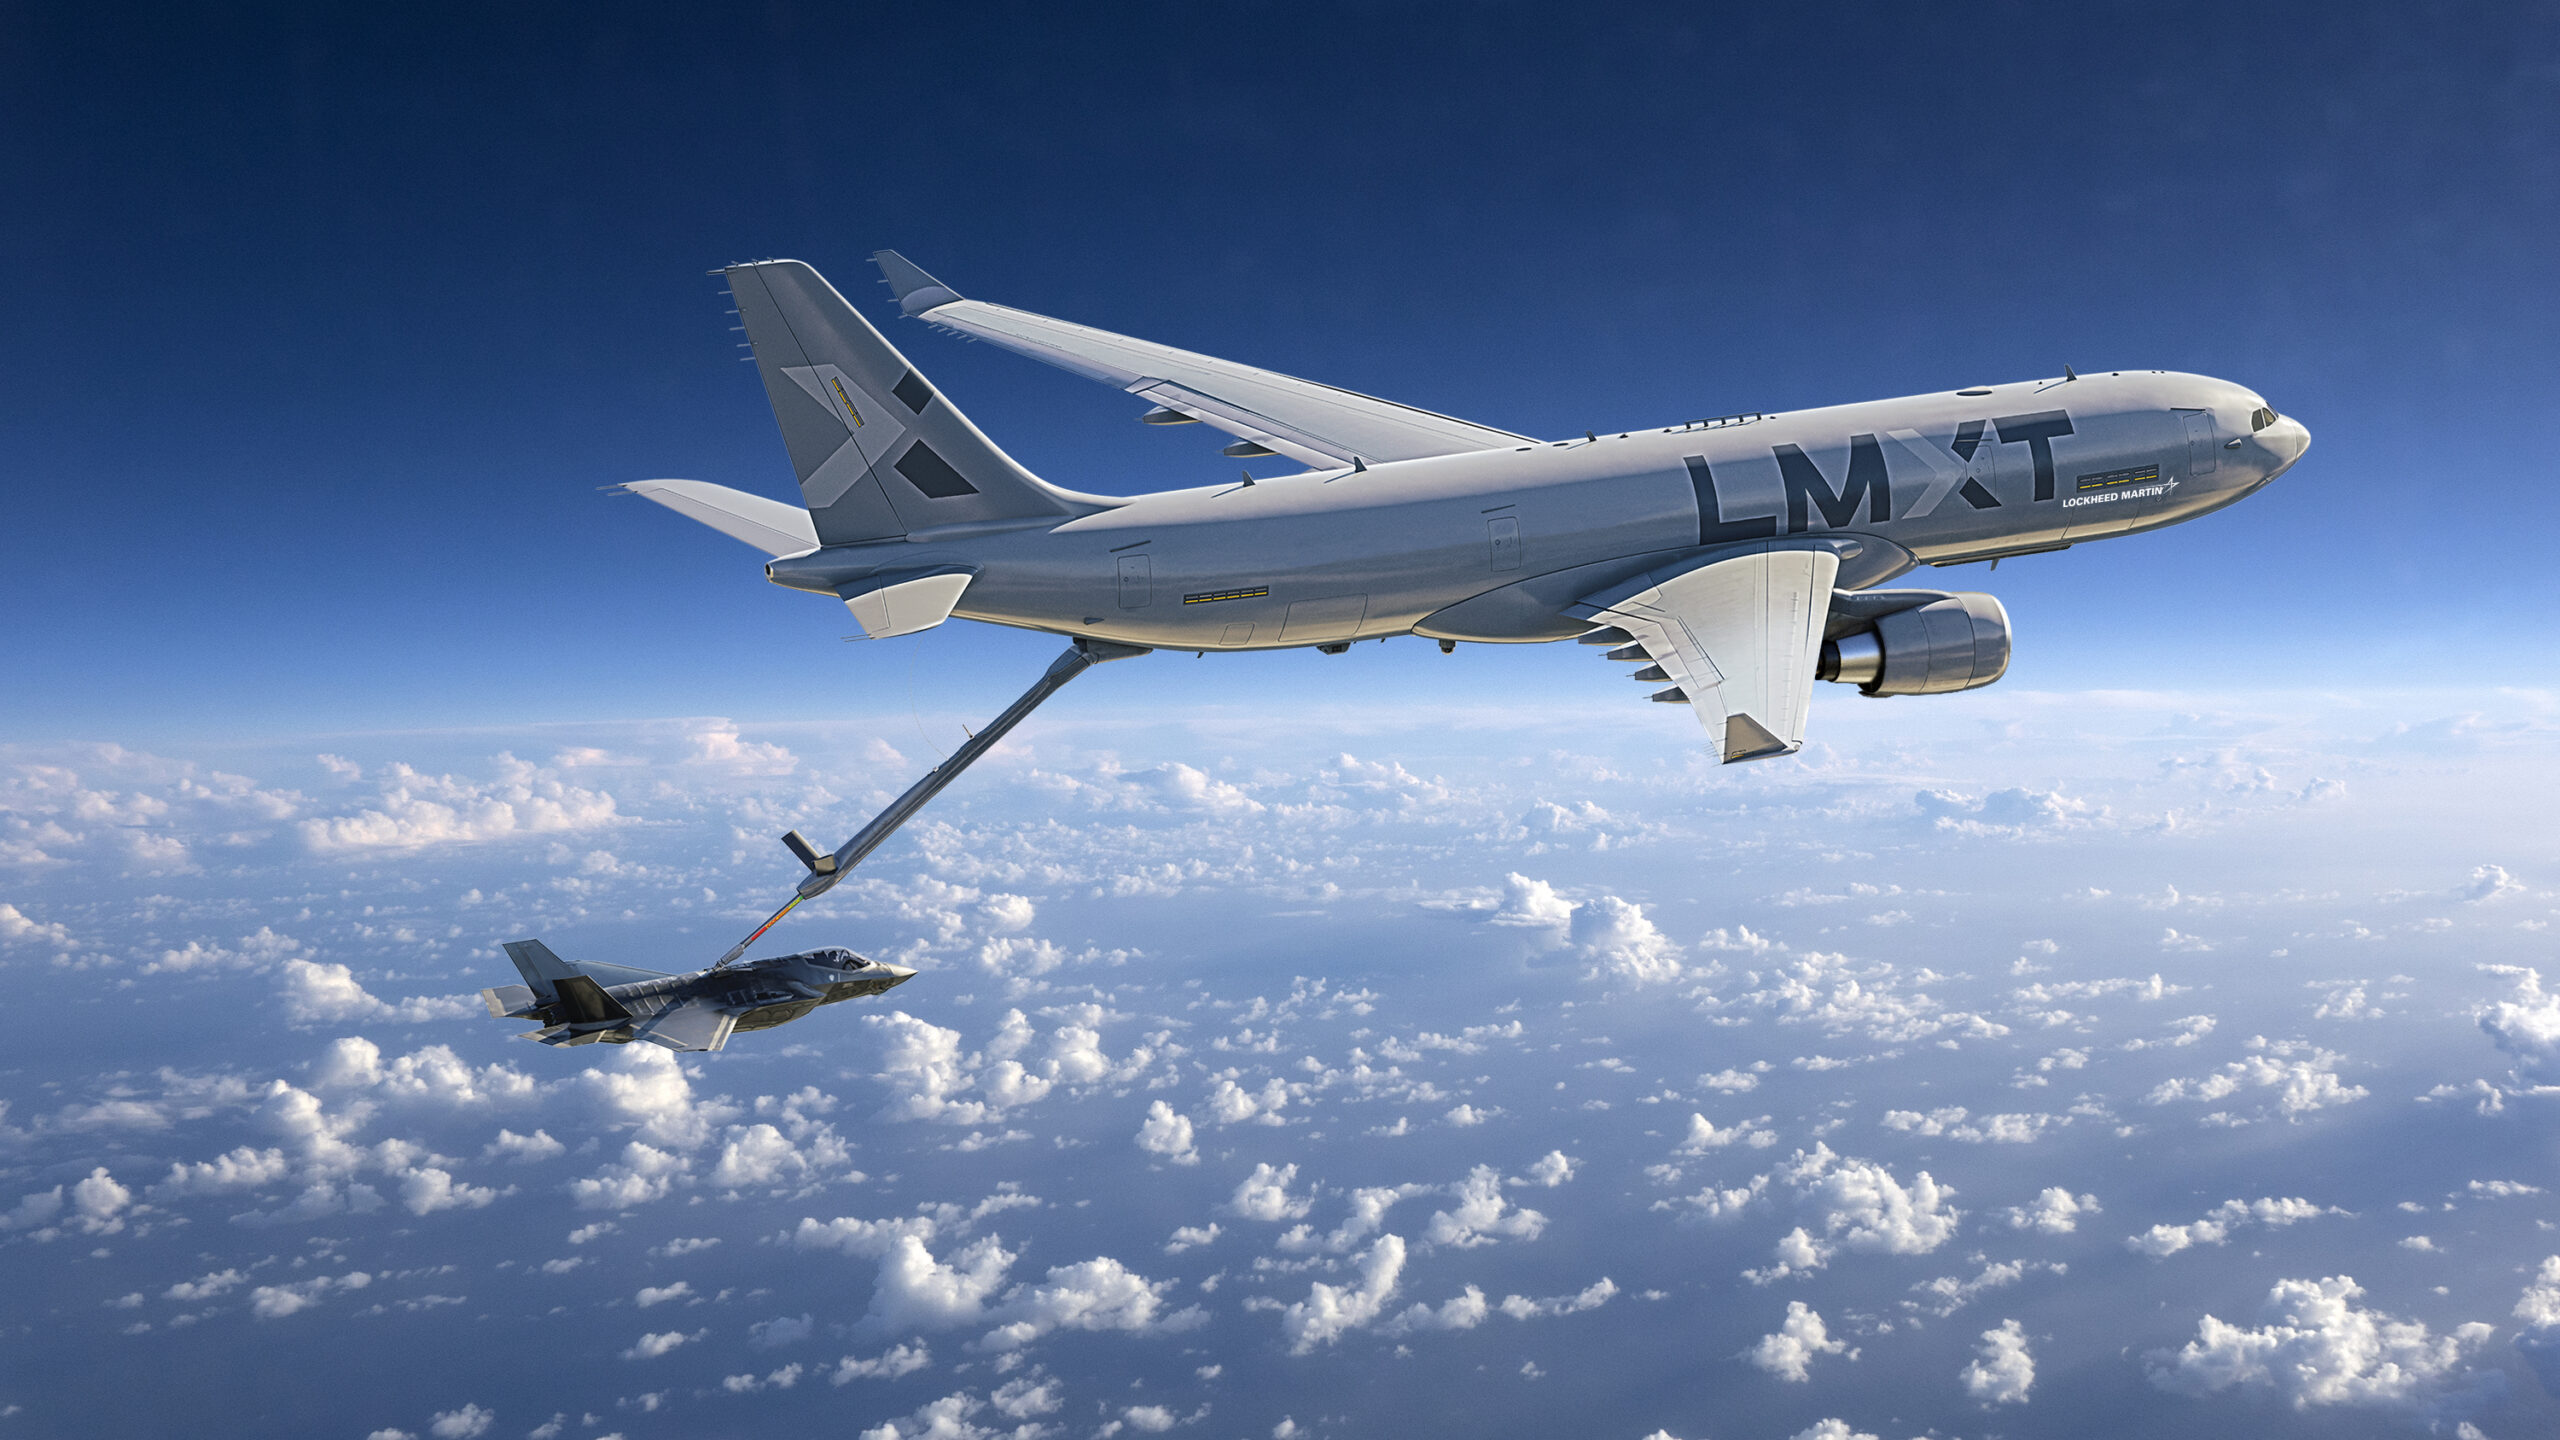 LMXT exit: Lockheed to skip KC-135 recap race, focus on next gen tanker